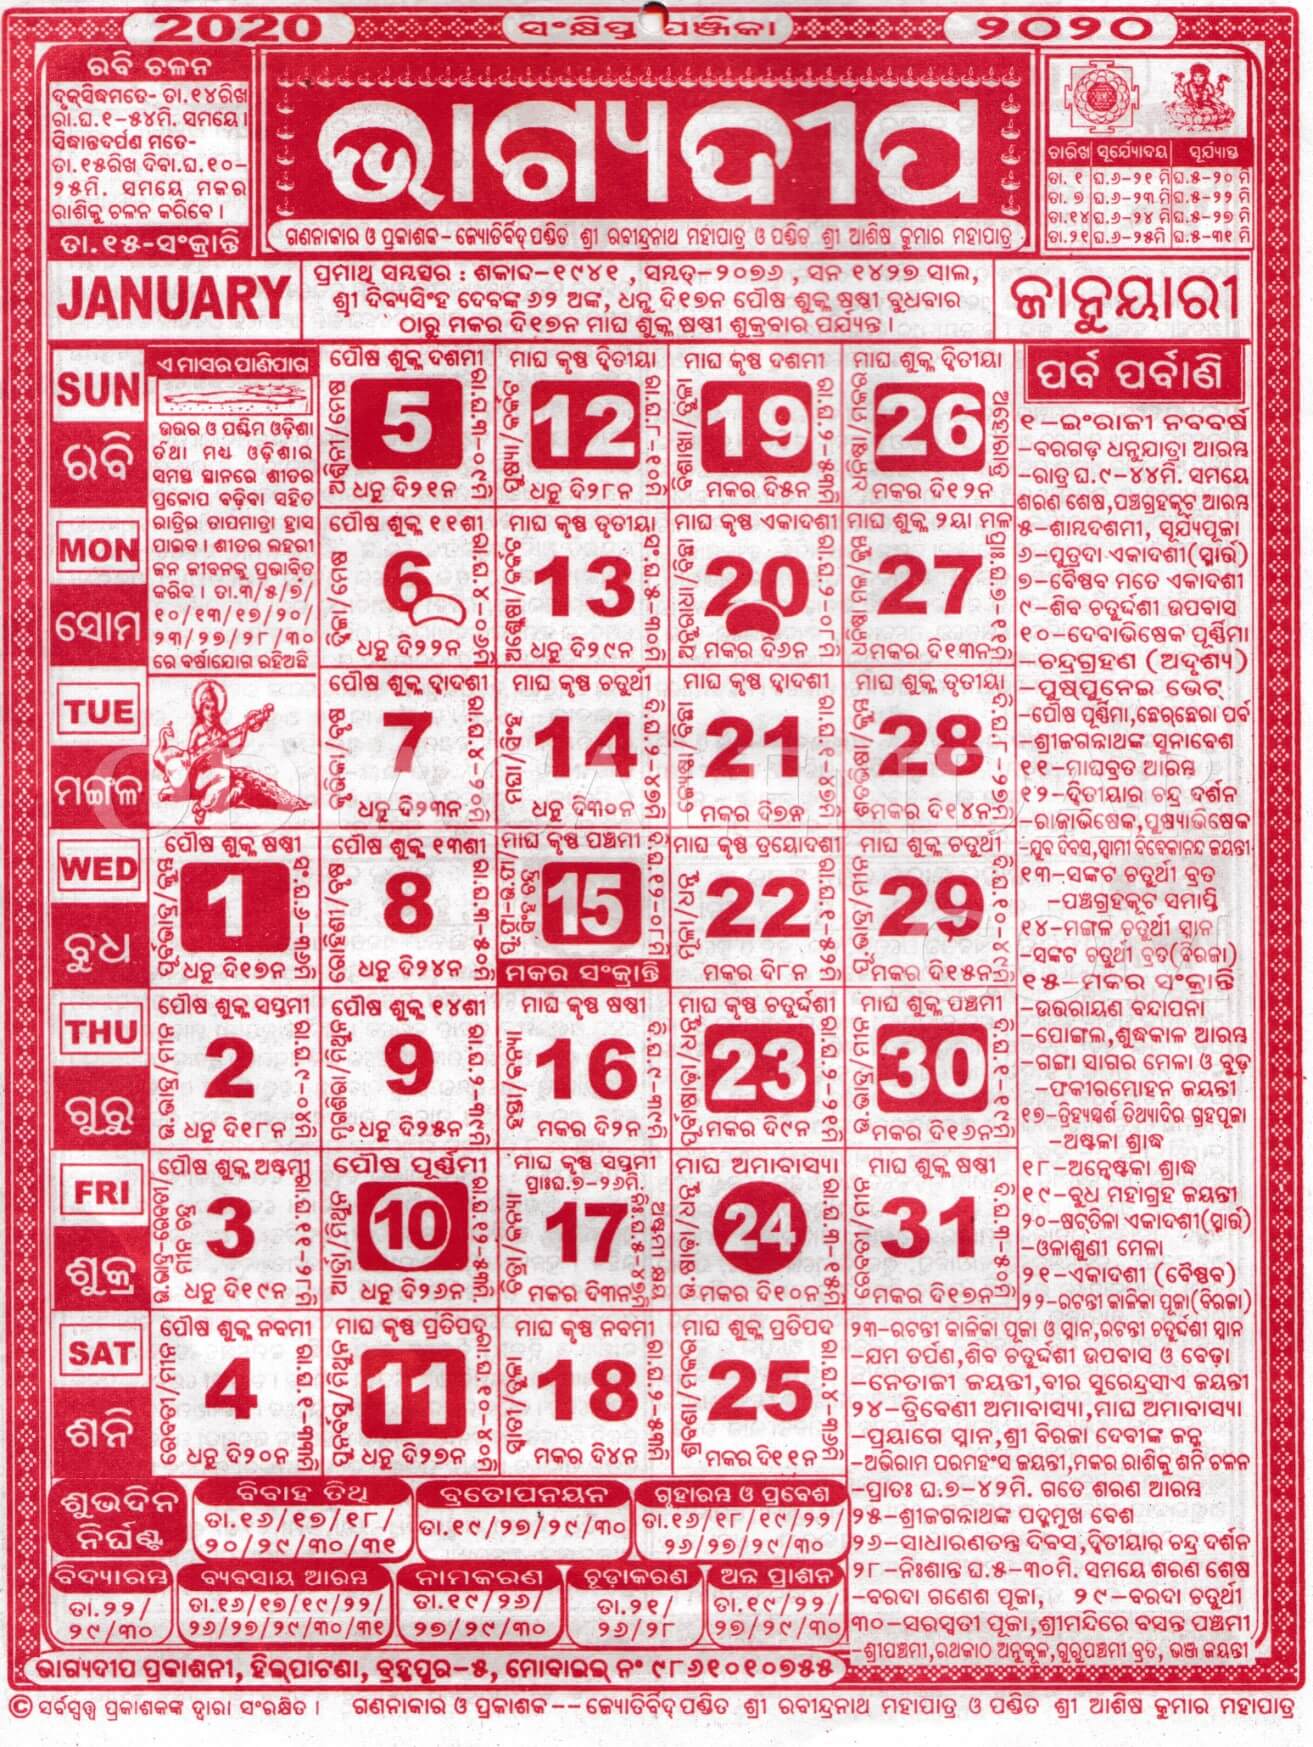 bhagyadeep-odia-calendar-january-2020-download-hd-quality